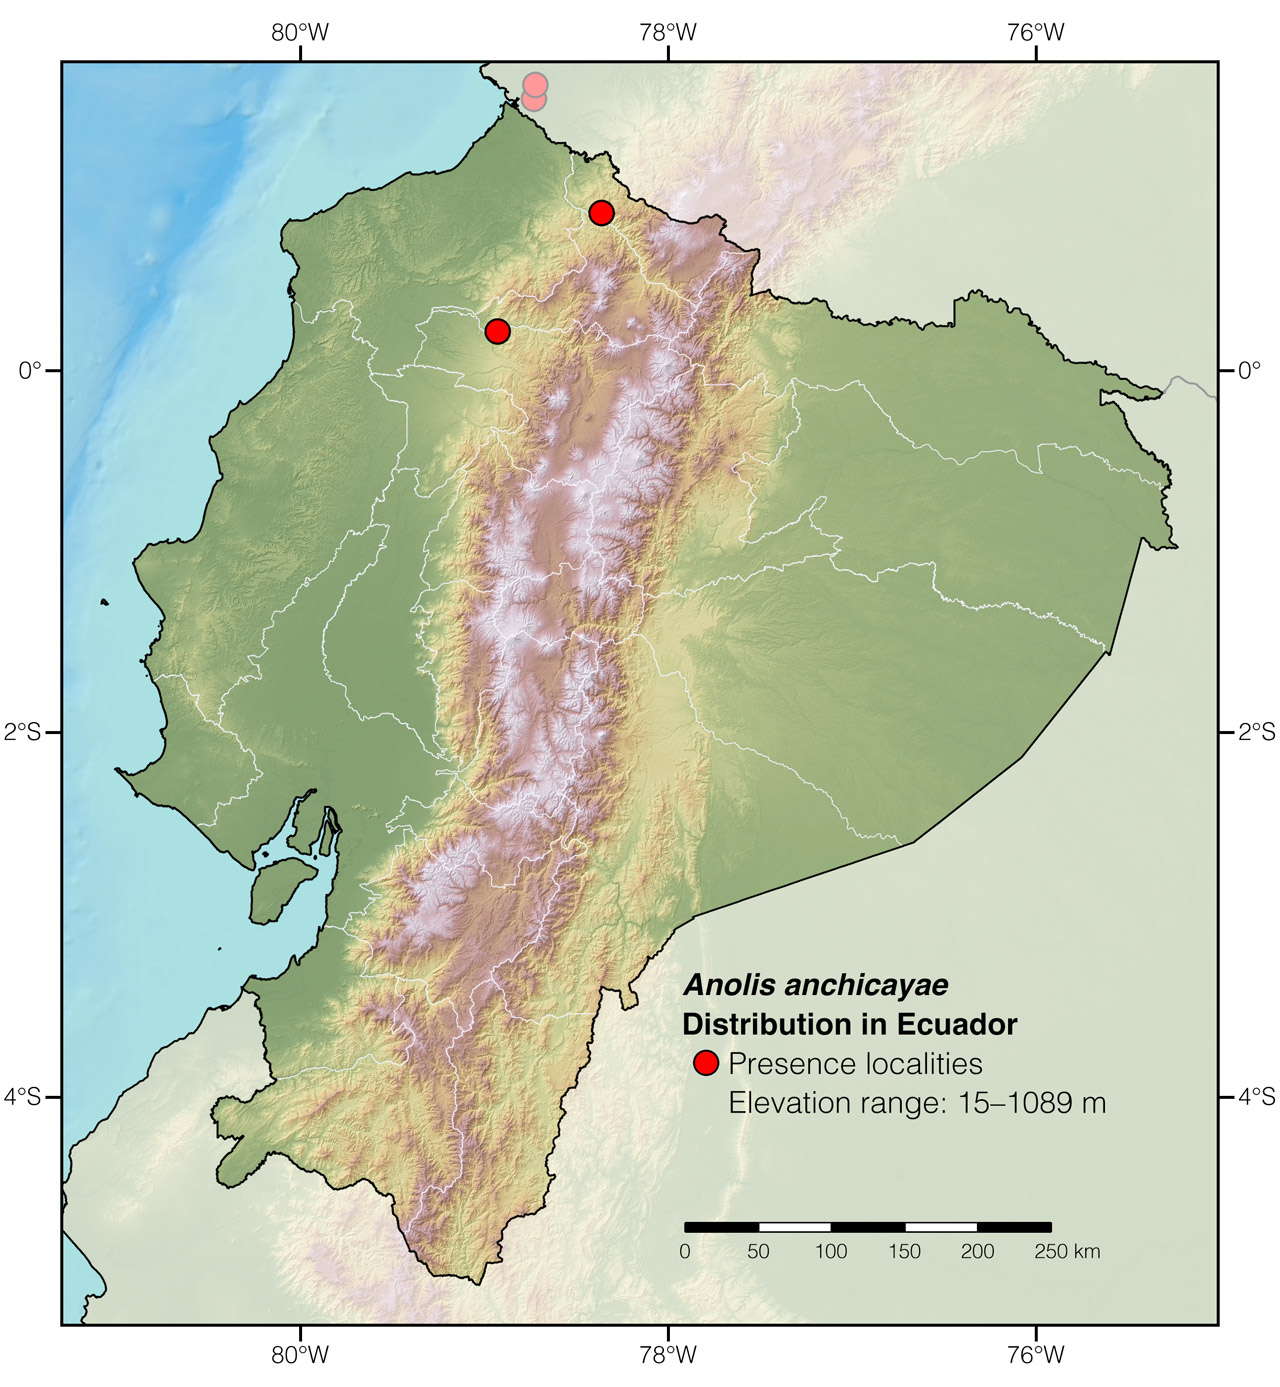 Distribution of Anolis anchicayae in Ecuador